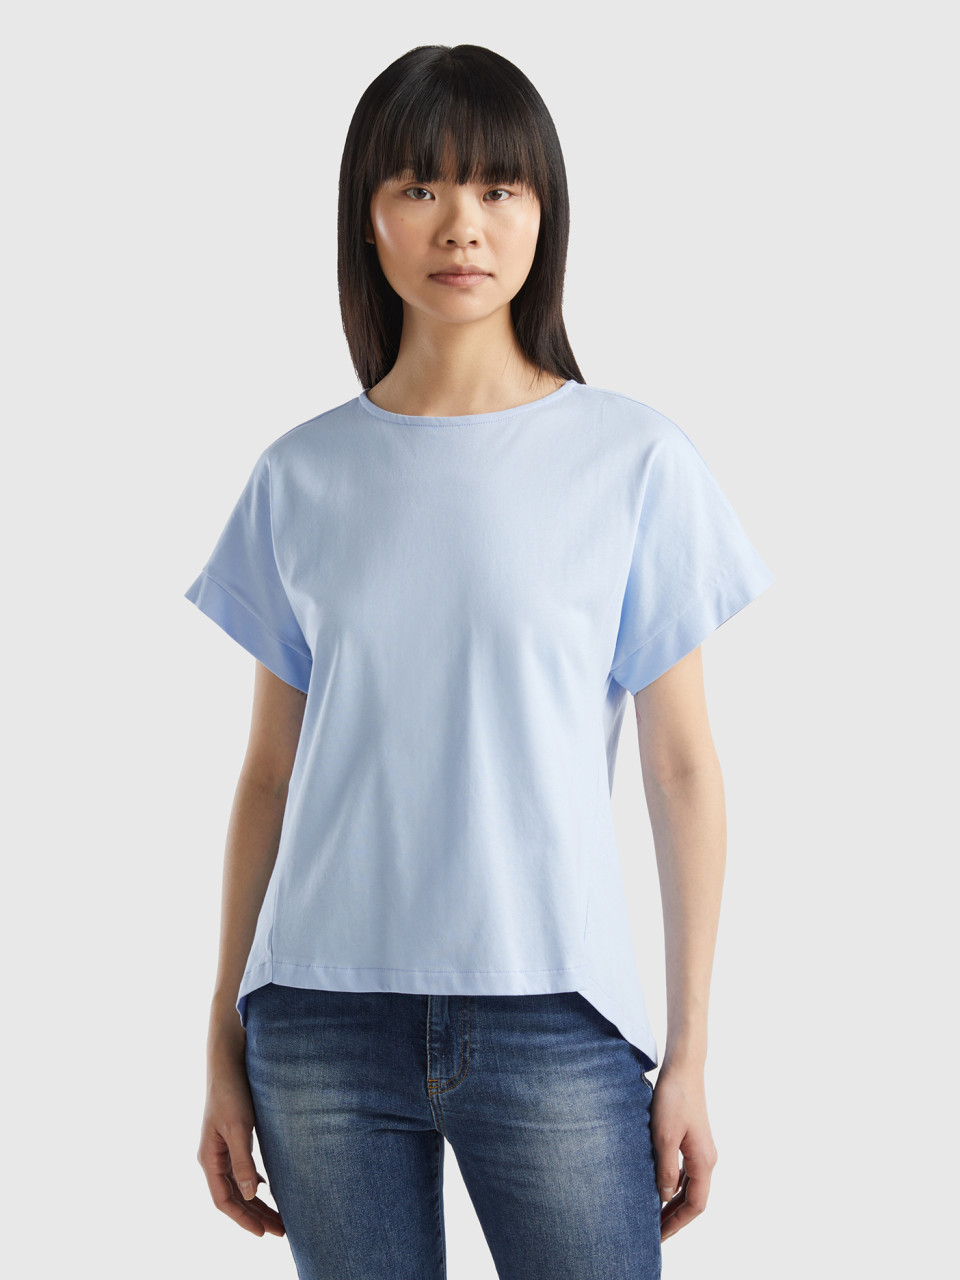 Benetton, T-shirt With Kimono Sleeves, Sky Blue, Women